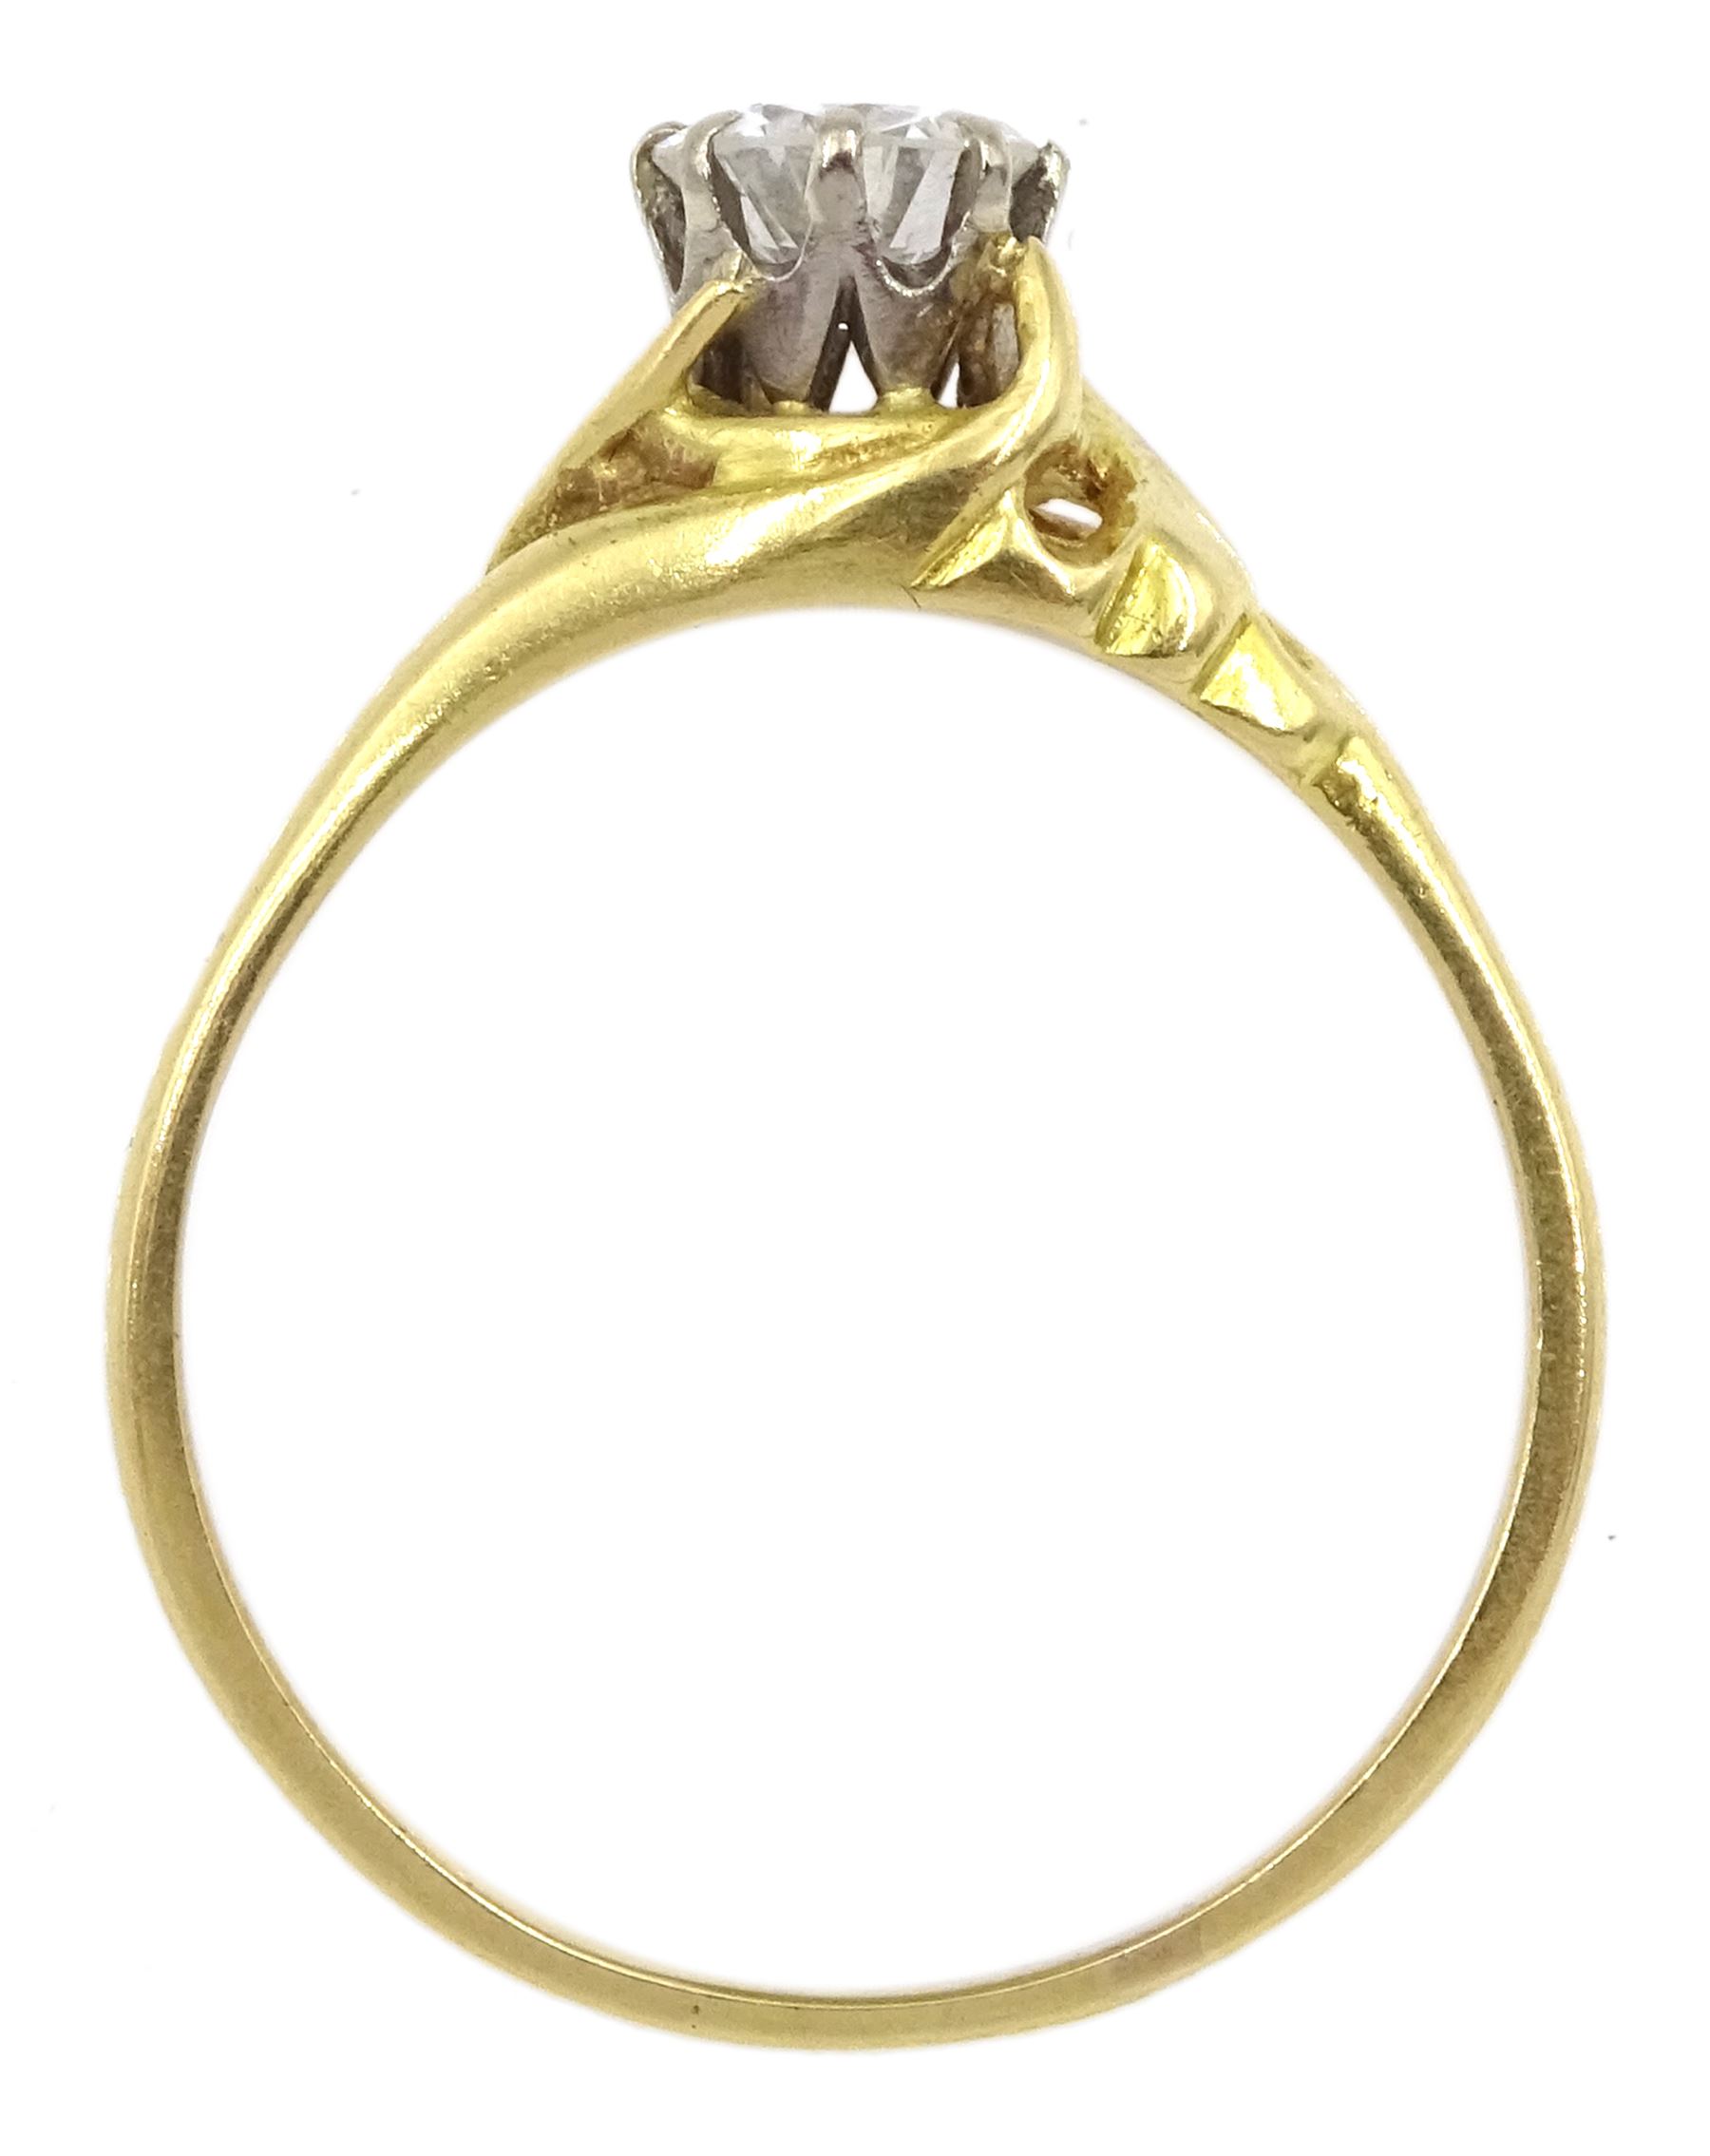 Gold single stone round brilliant cut diamond ring - Image 4 of 4